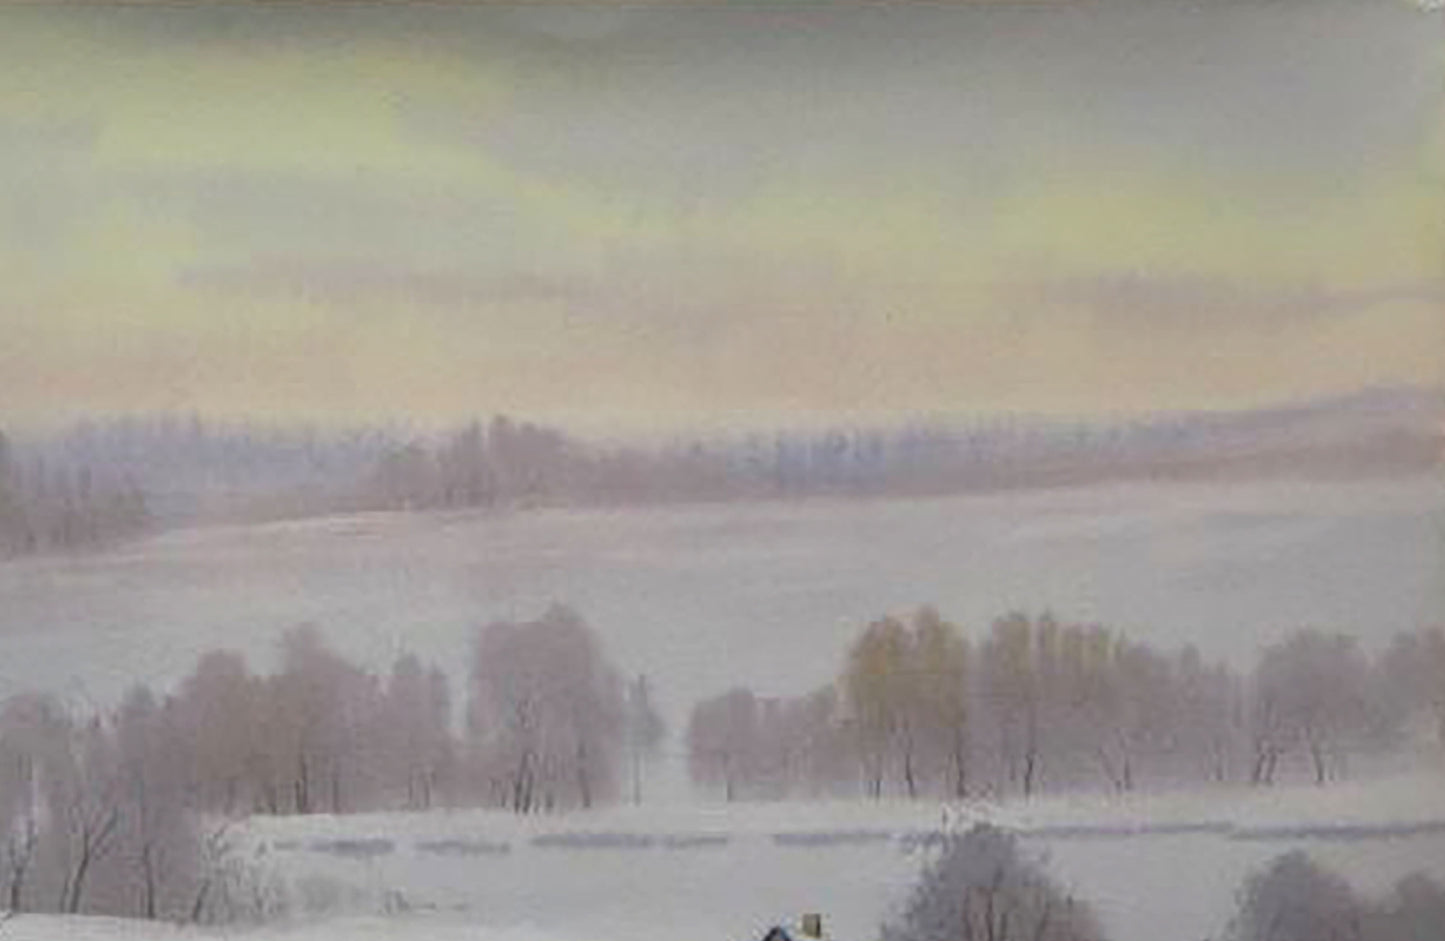 Watercolor painting February gave Savenets Valery